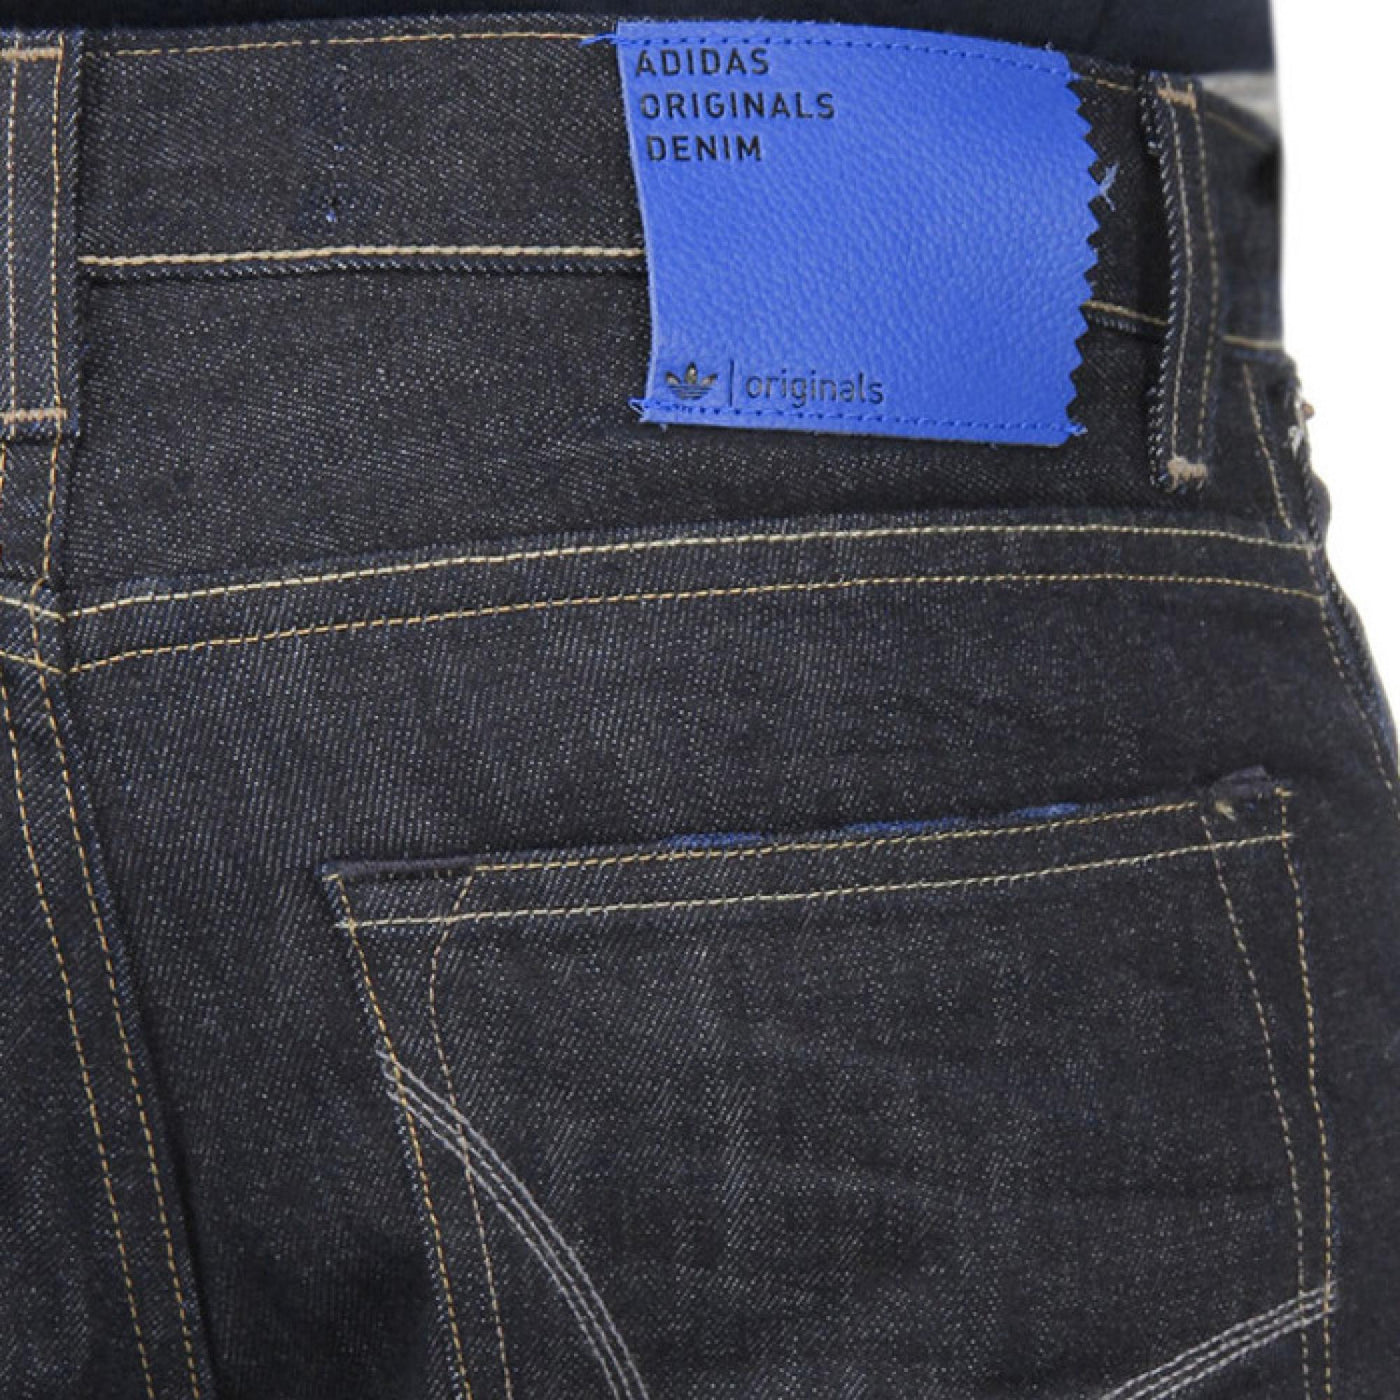 Adidas M Original fit jeans rins3ddnm